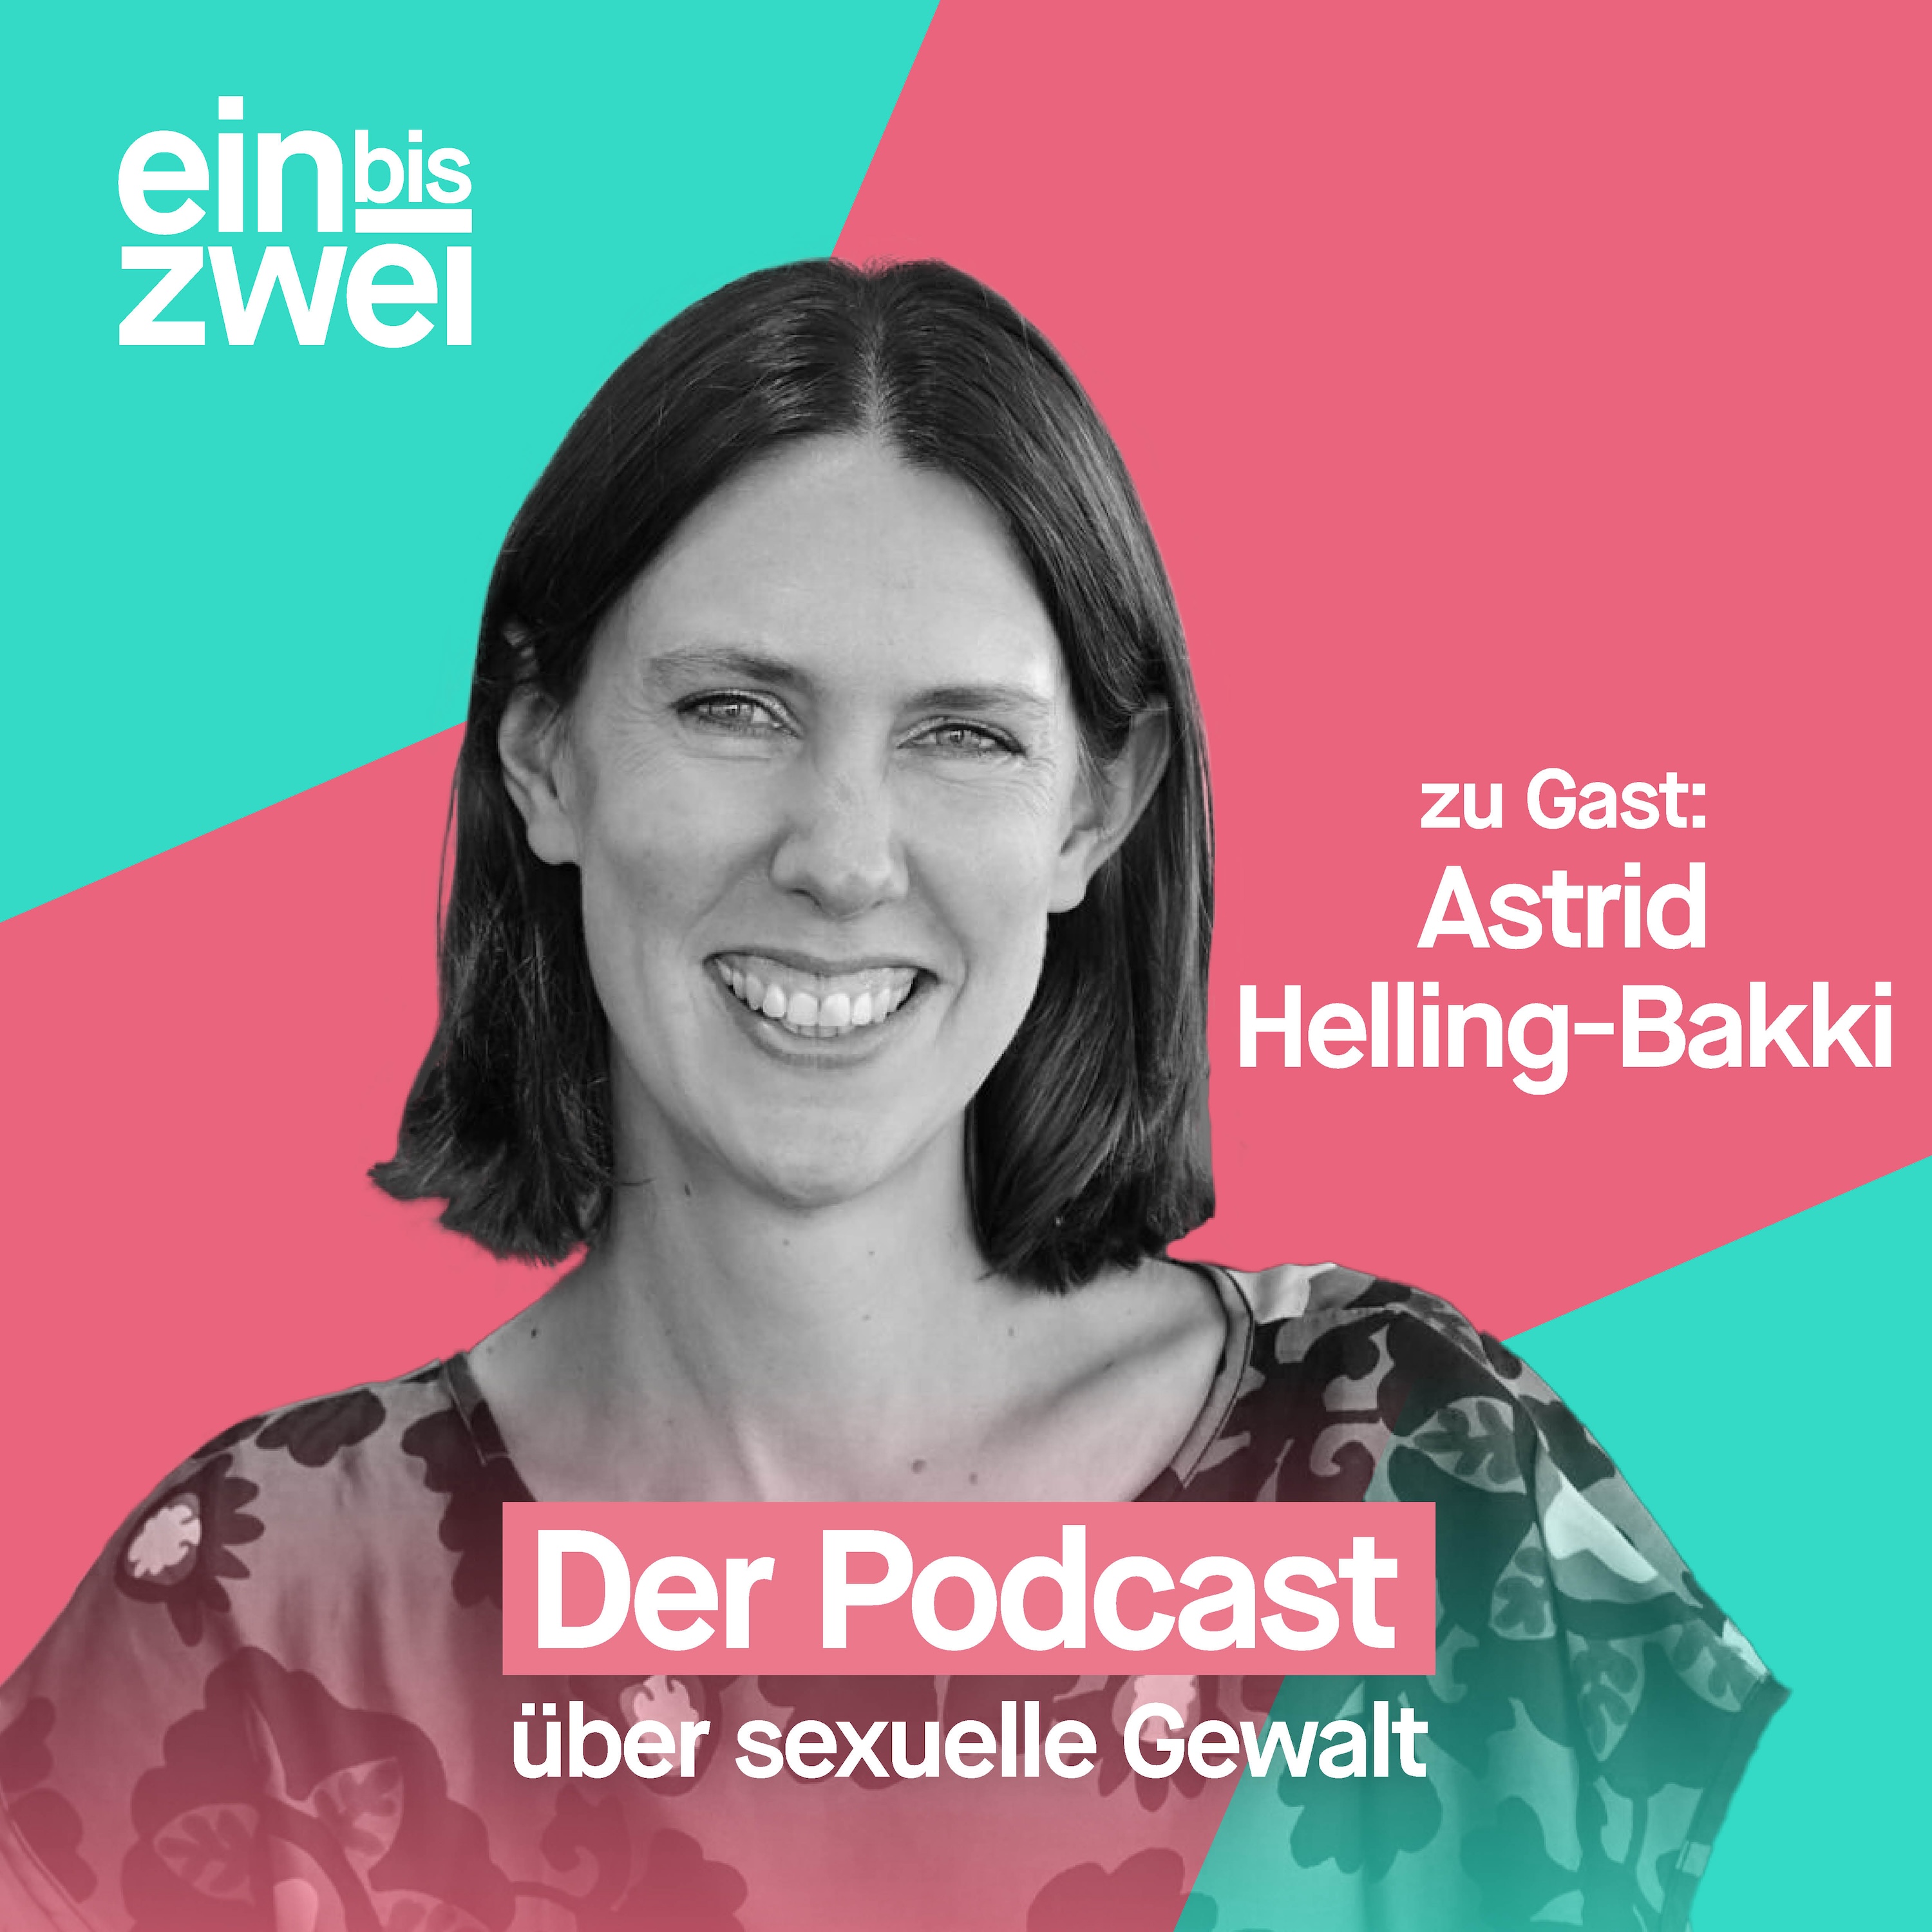 Astrid Helling-Bakki